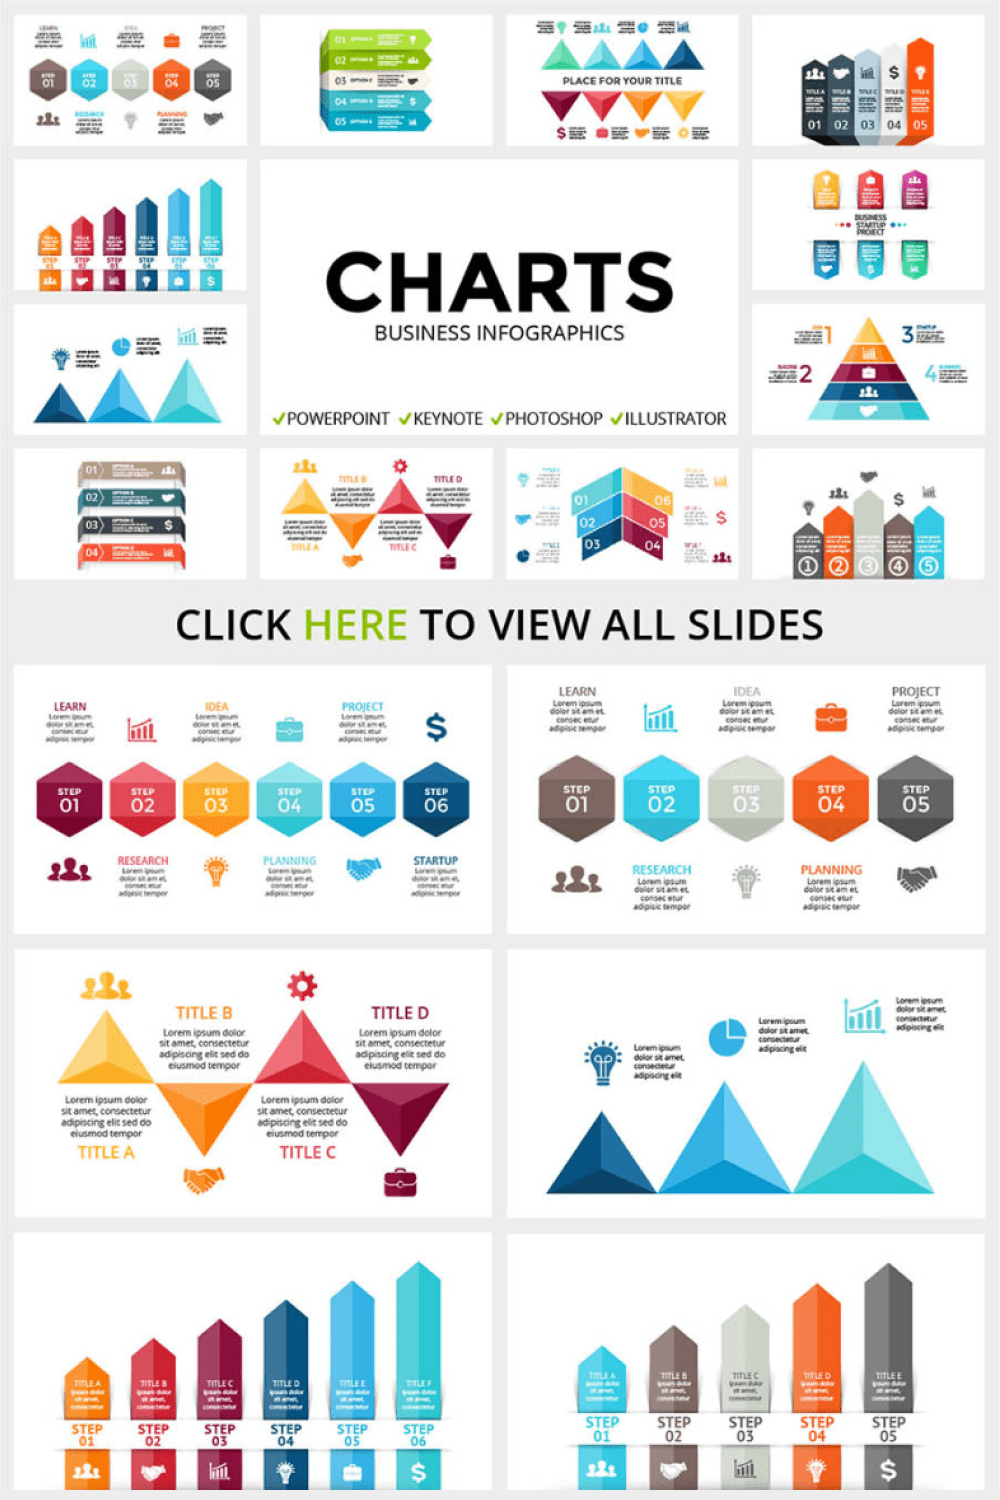 42 Charts Infographics: PPT, PPTX, KEY, PSD, EPS, AI, JPEG - MasterBundles - Pinterest Collage Image.